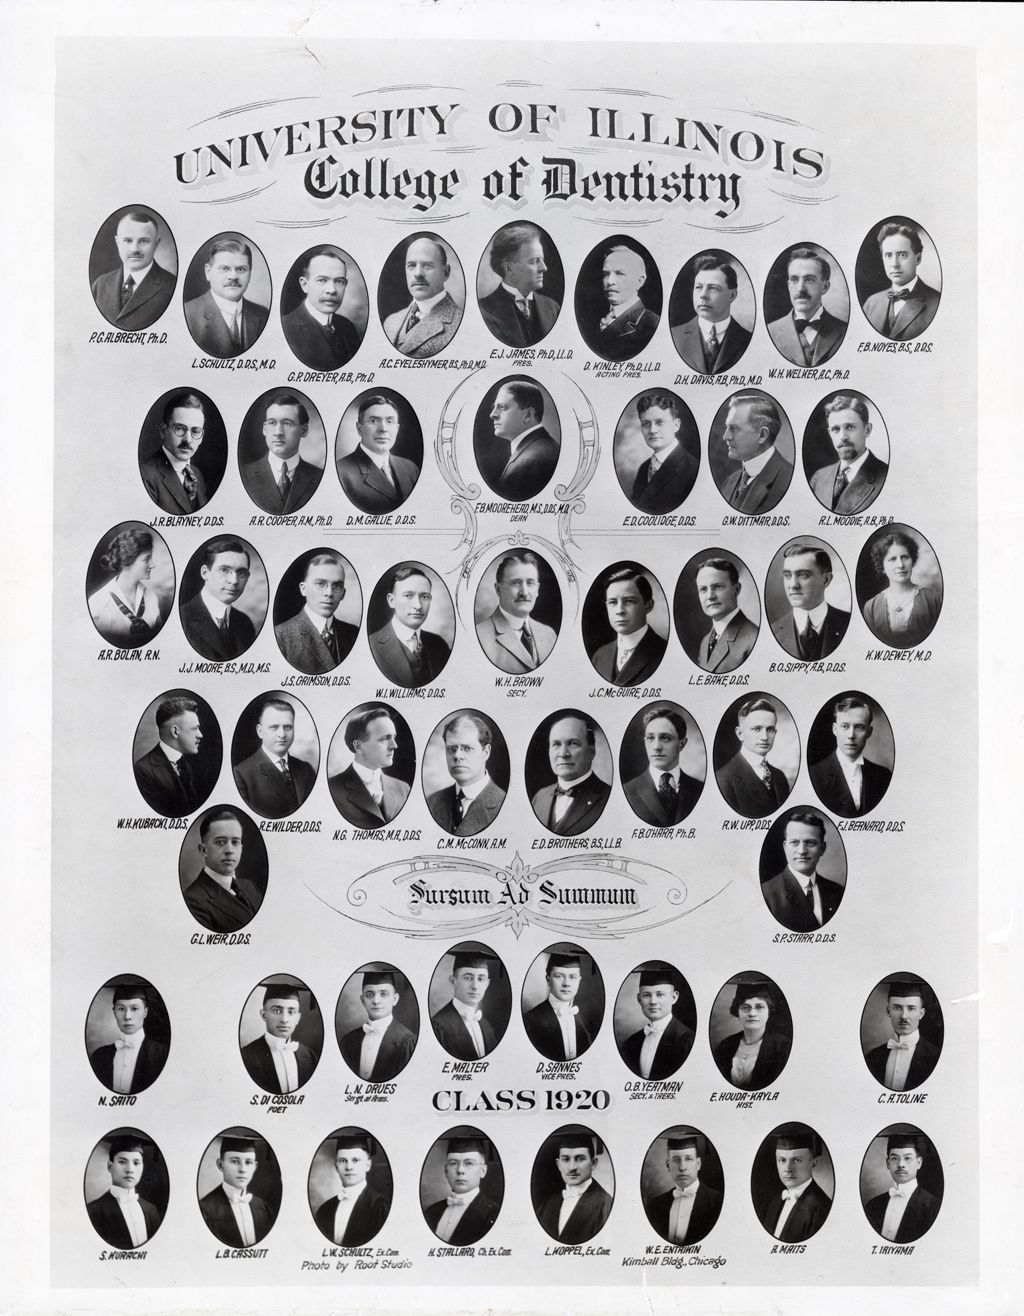 1920 graduating class, University of Illinois College of Dentistry